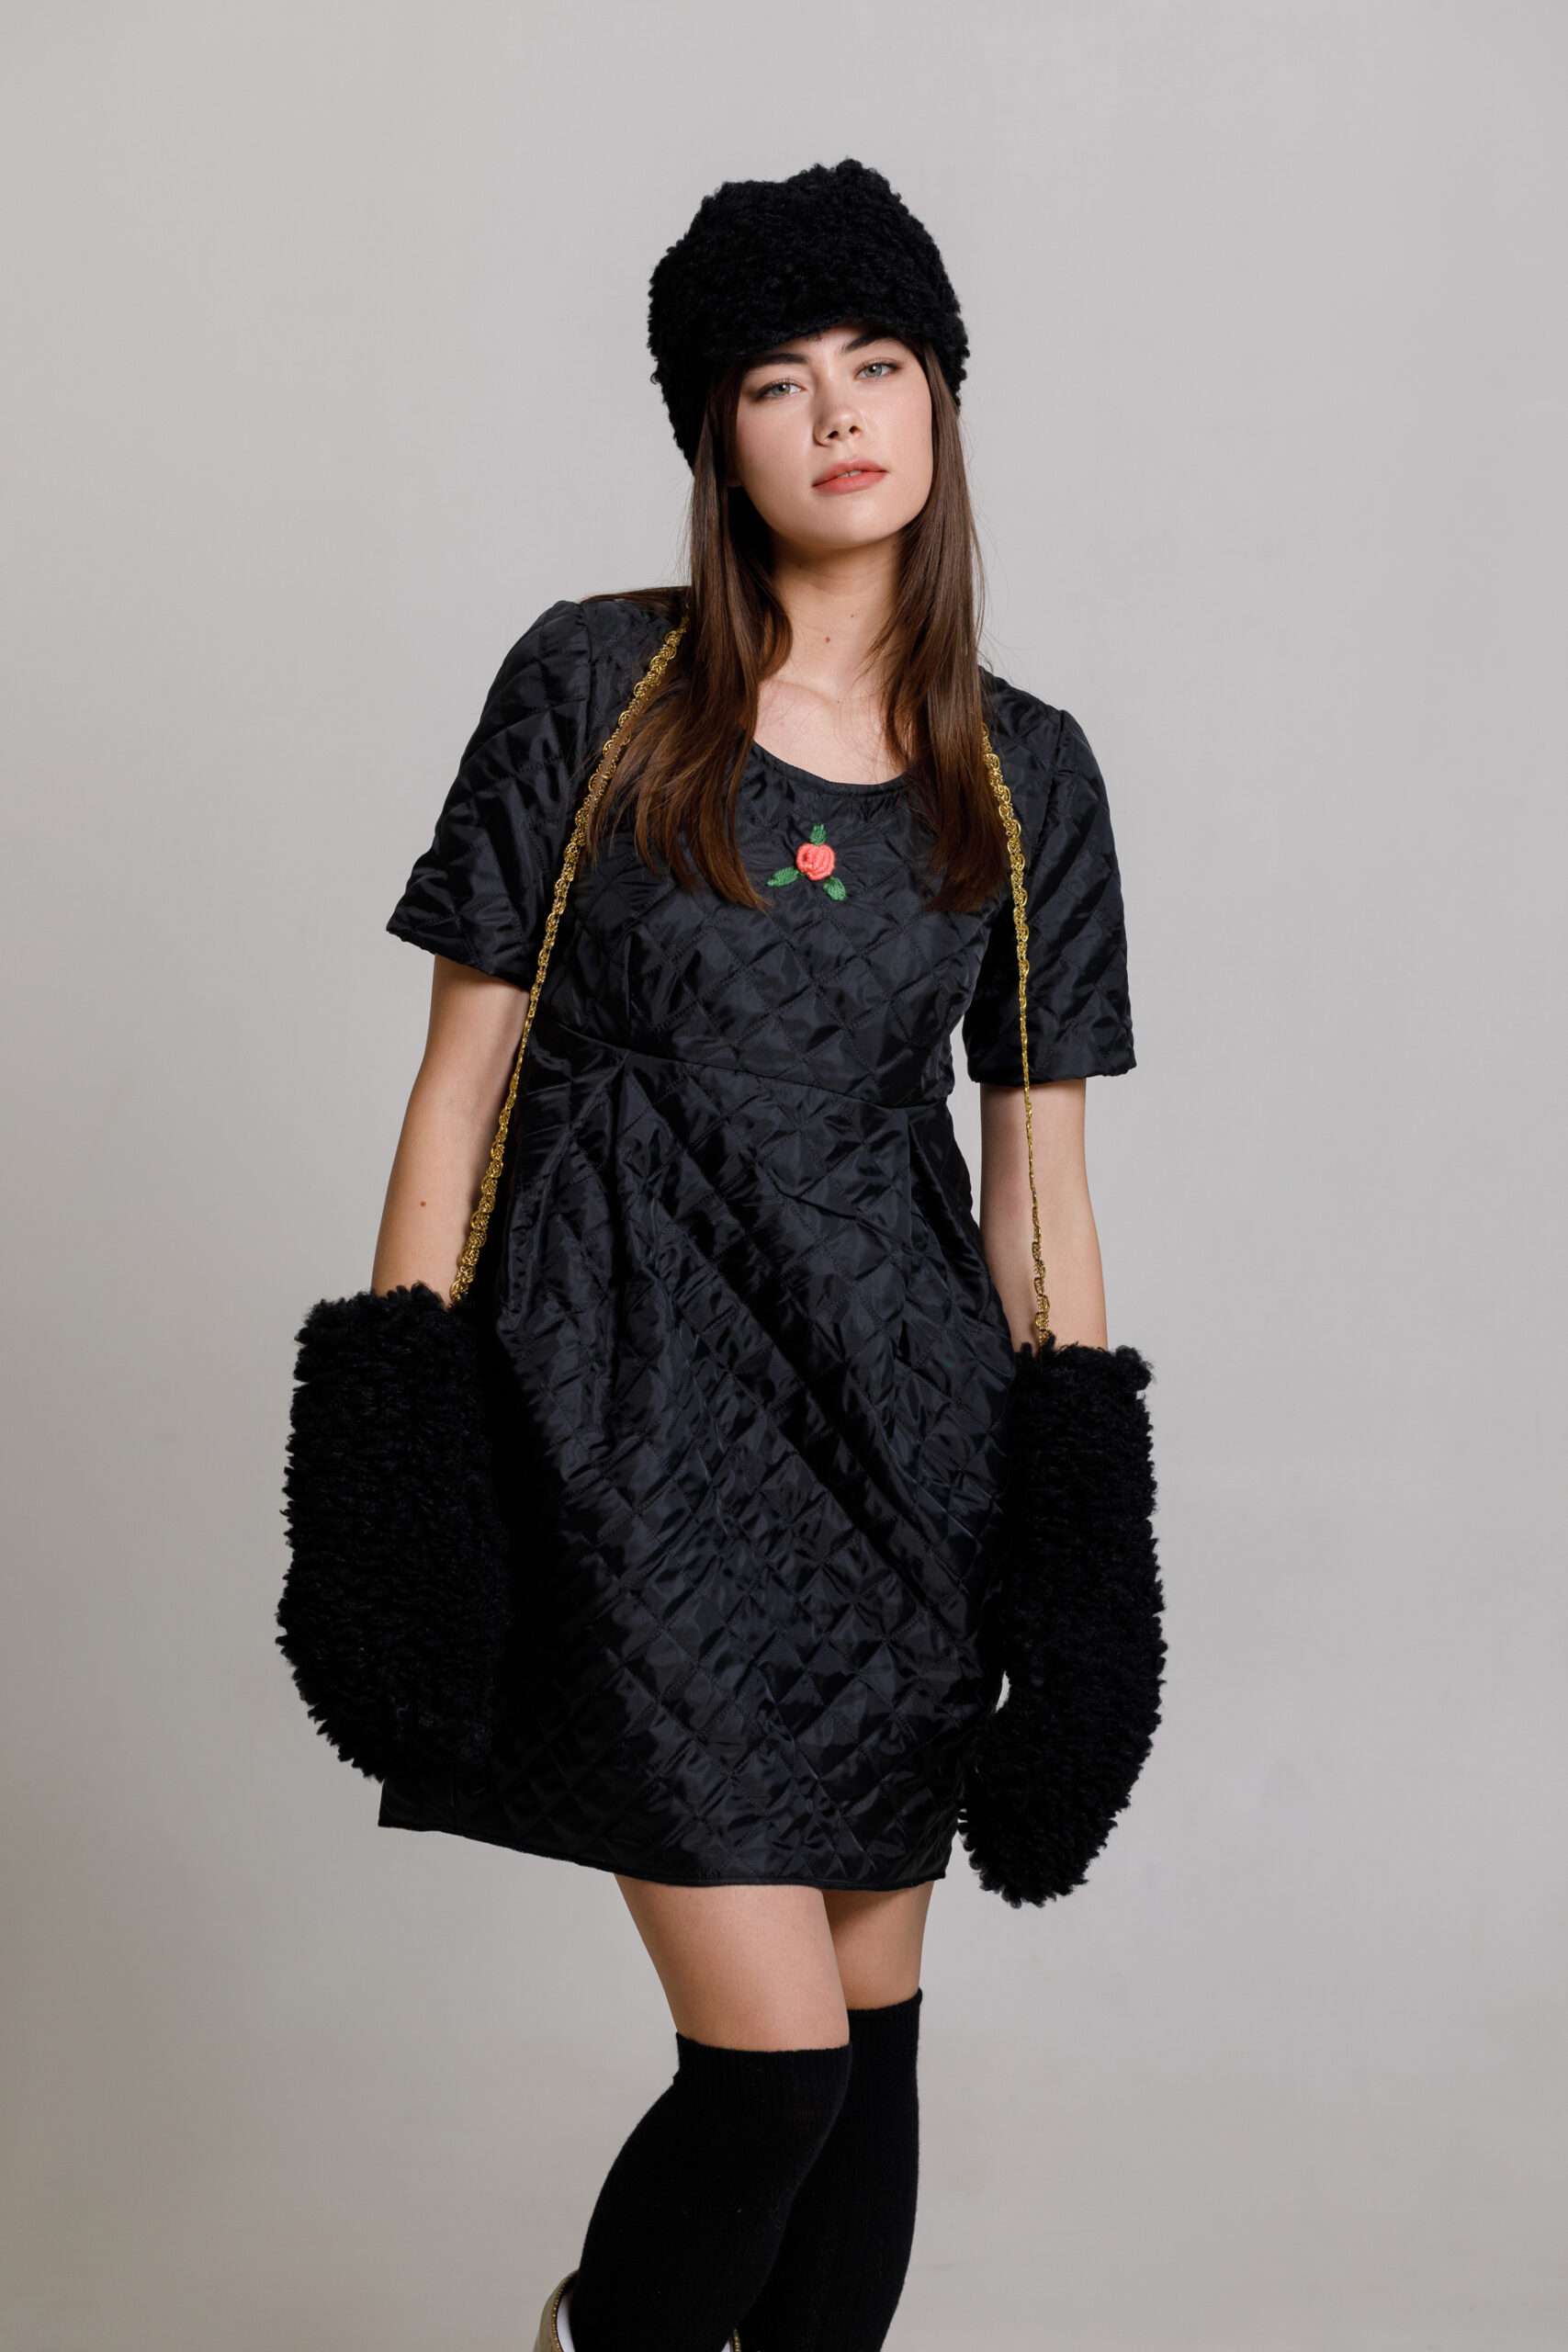 Cap black faux fur. Natural fabrics, original design, handmade embroidery